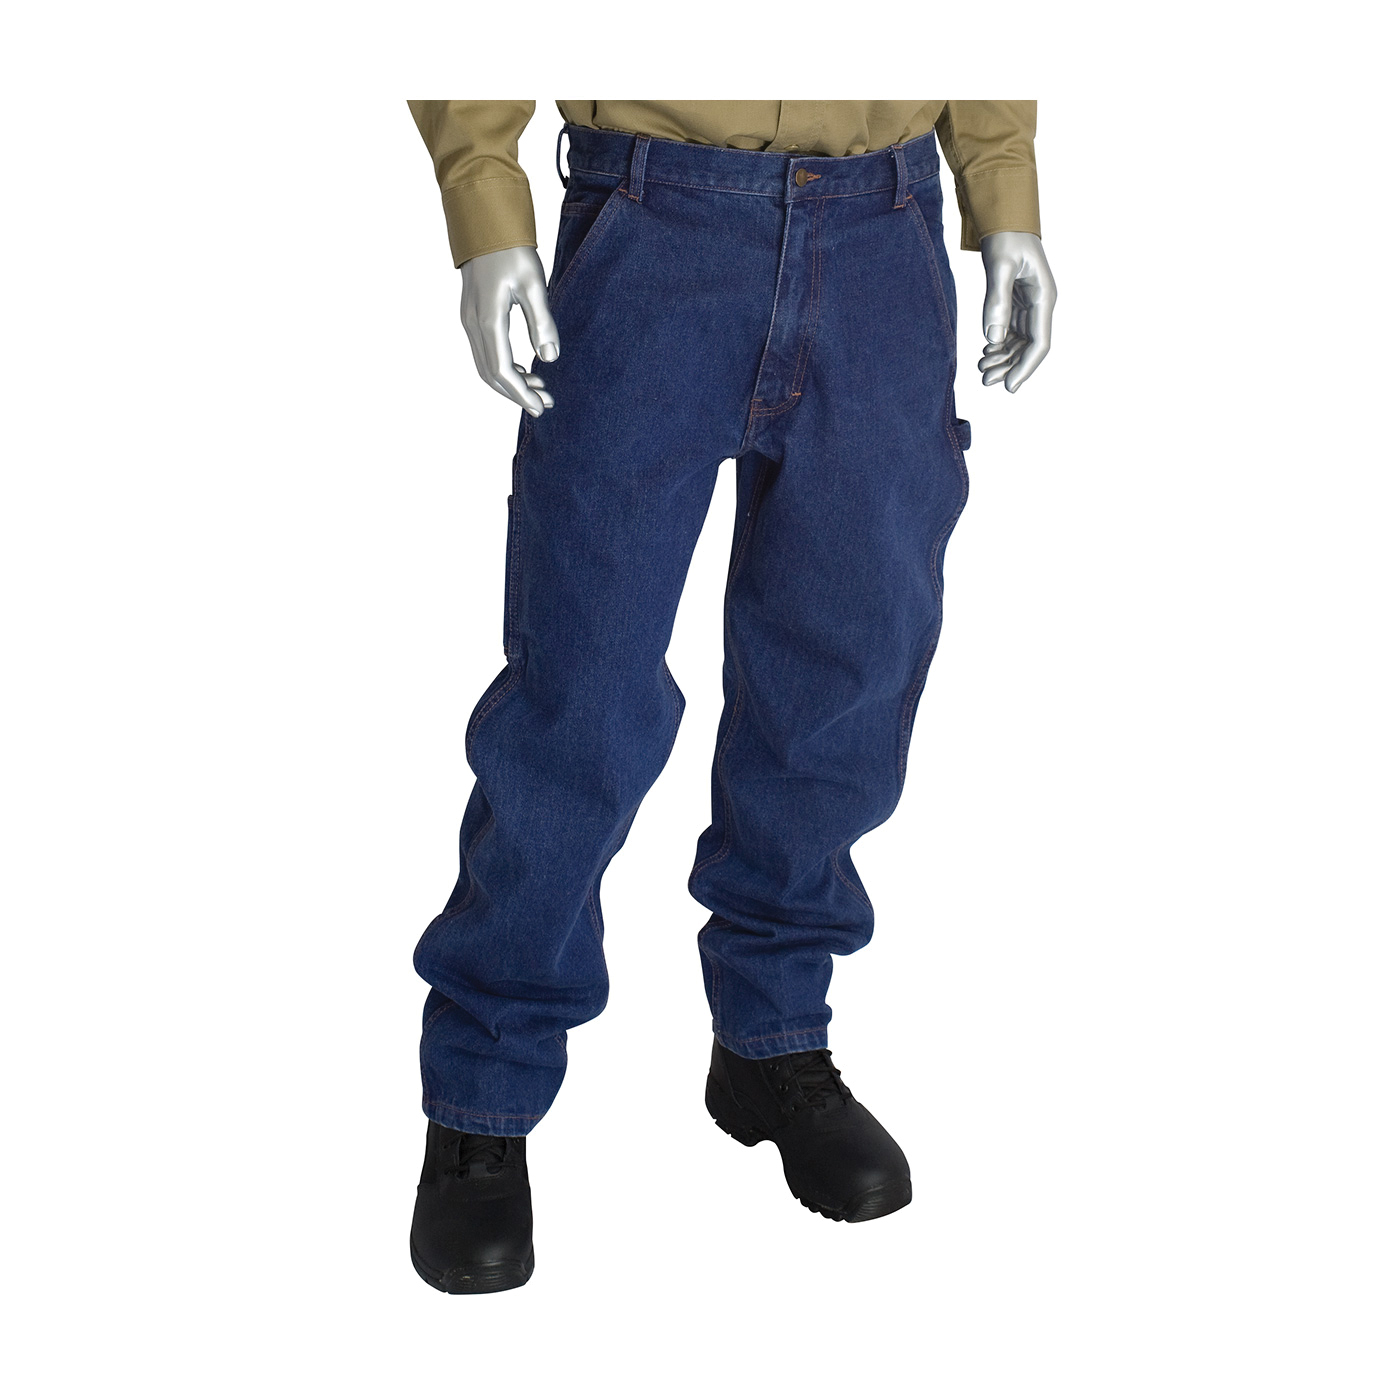 PIP® 385-FRCJ-4632 Carpenter Jeans, 46 in Waist, 32 in L Inseam, Blue Denim, Cotton